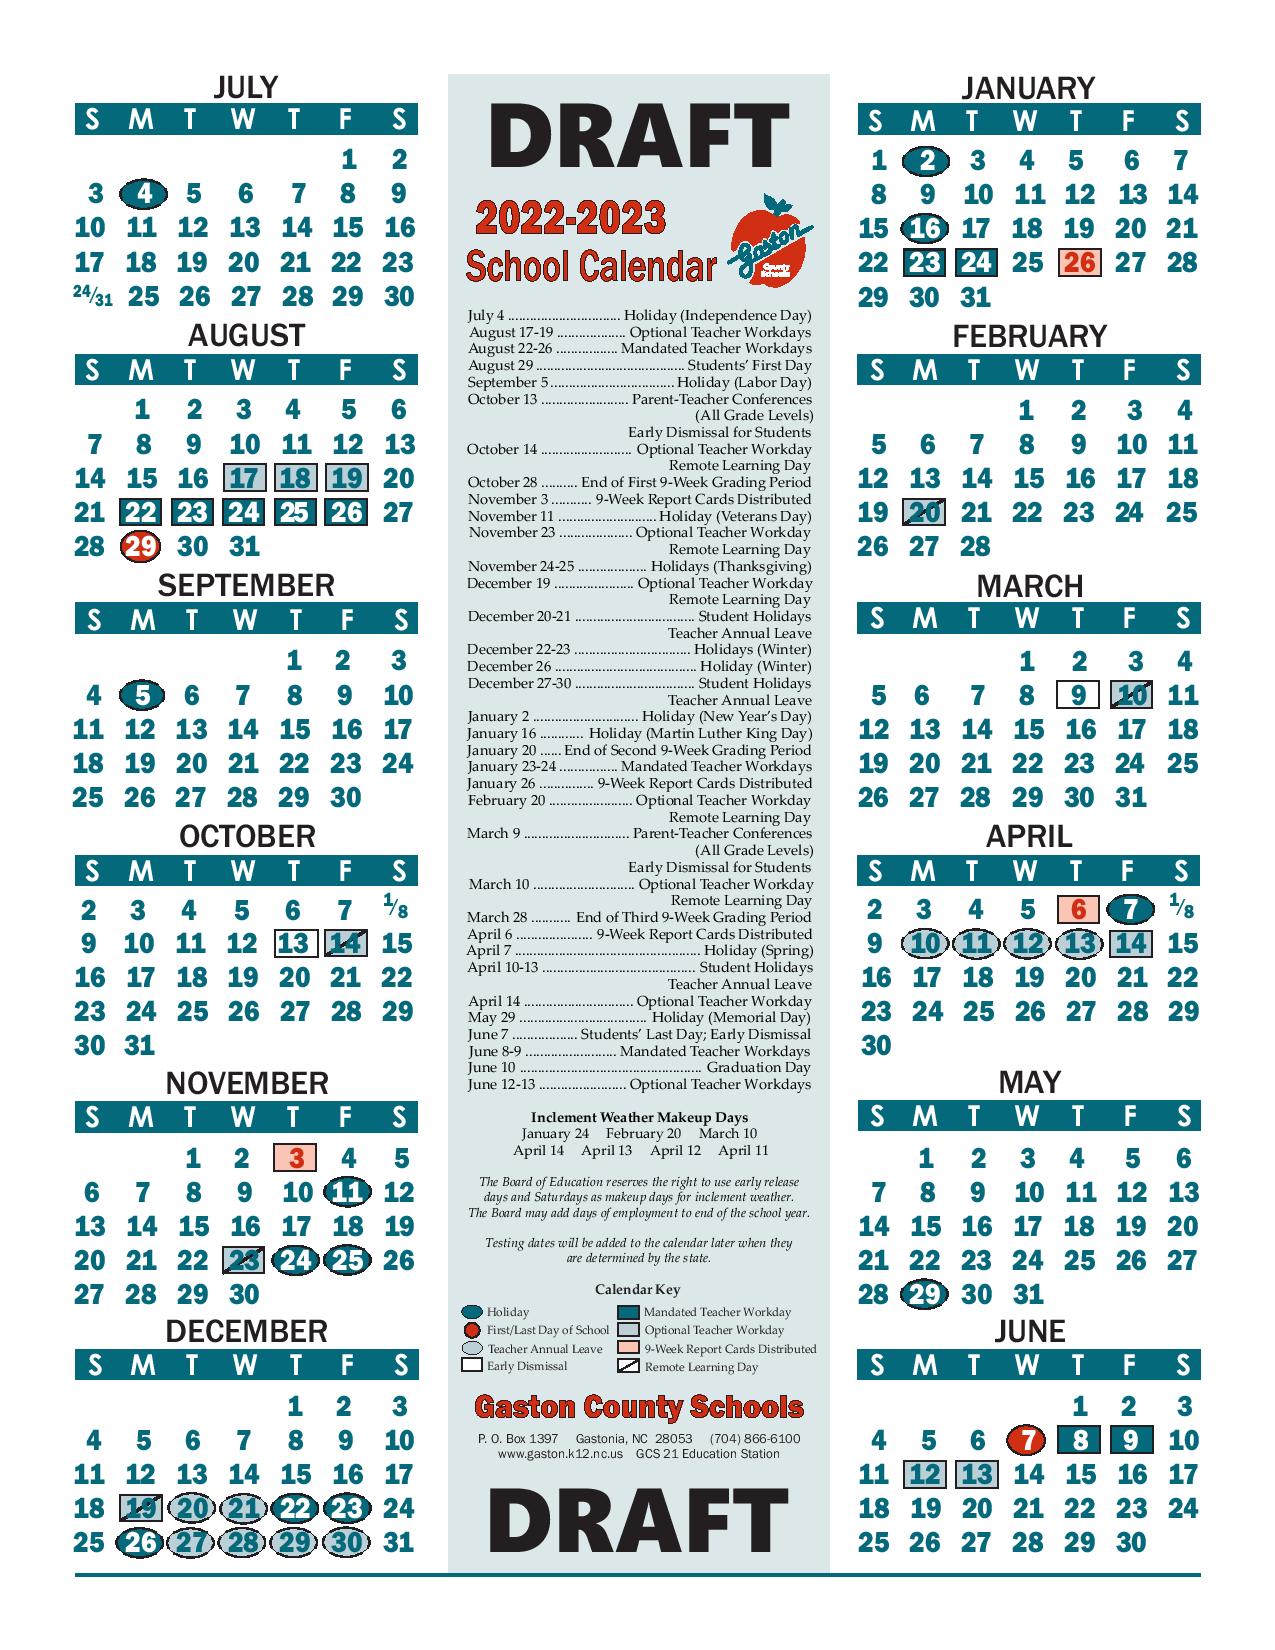 Gaston County Schools Calendar 20222023 in PDF